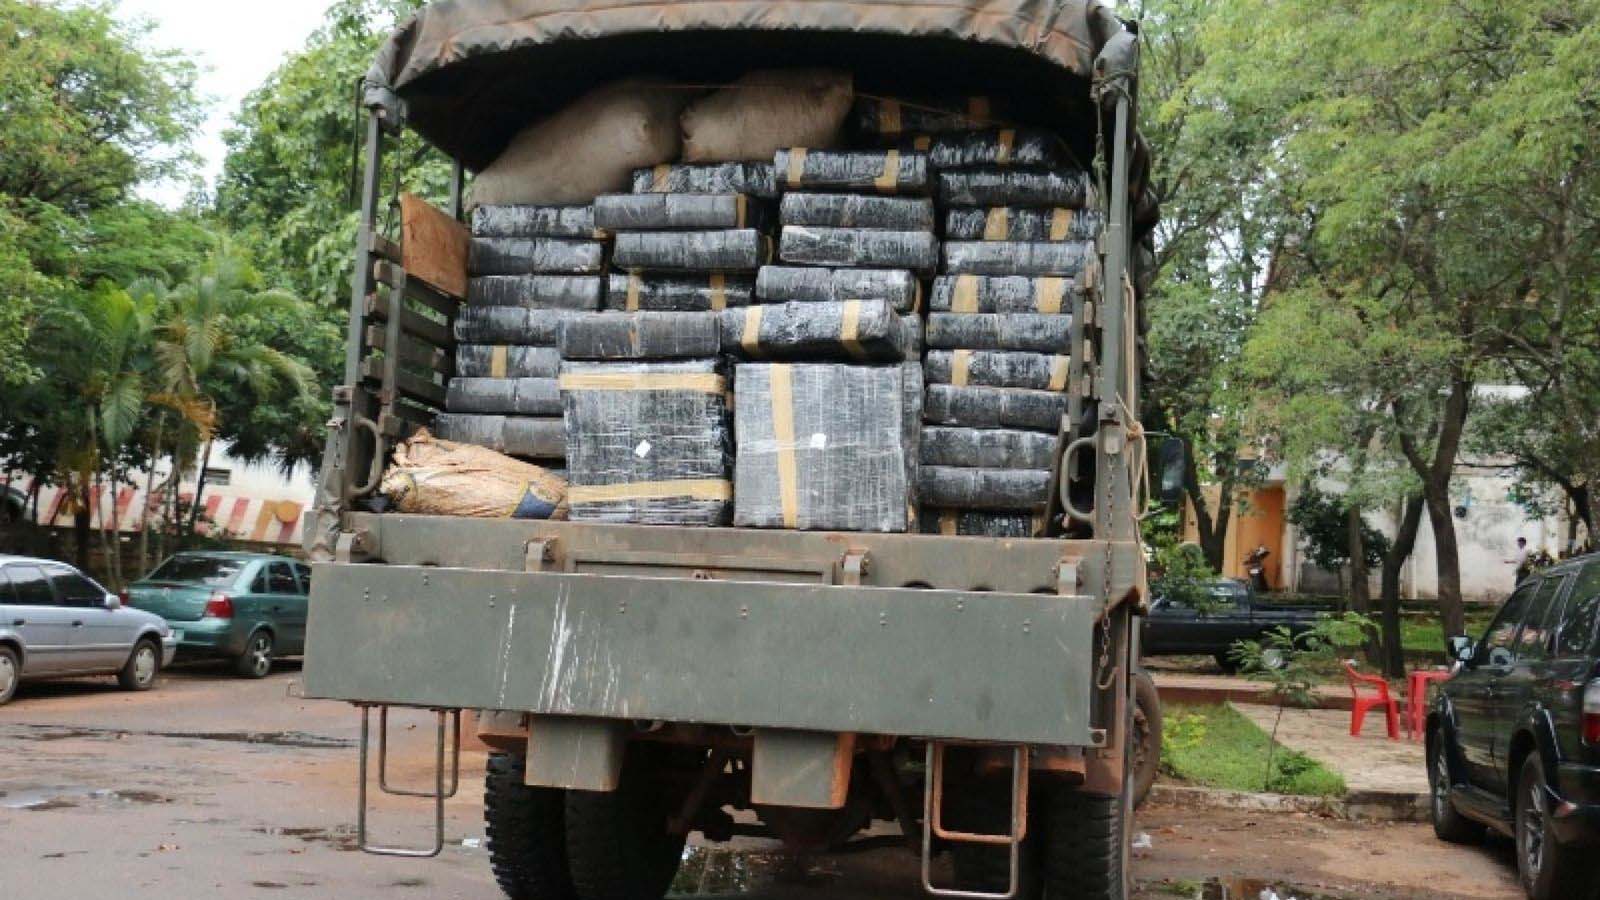 Doble llave - Decomisan 10 toneladas de marihuana en Paraguay